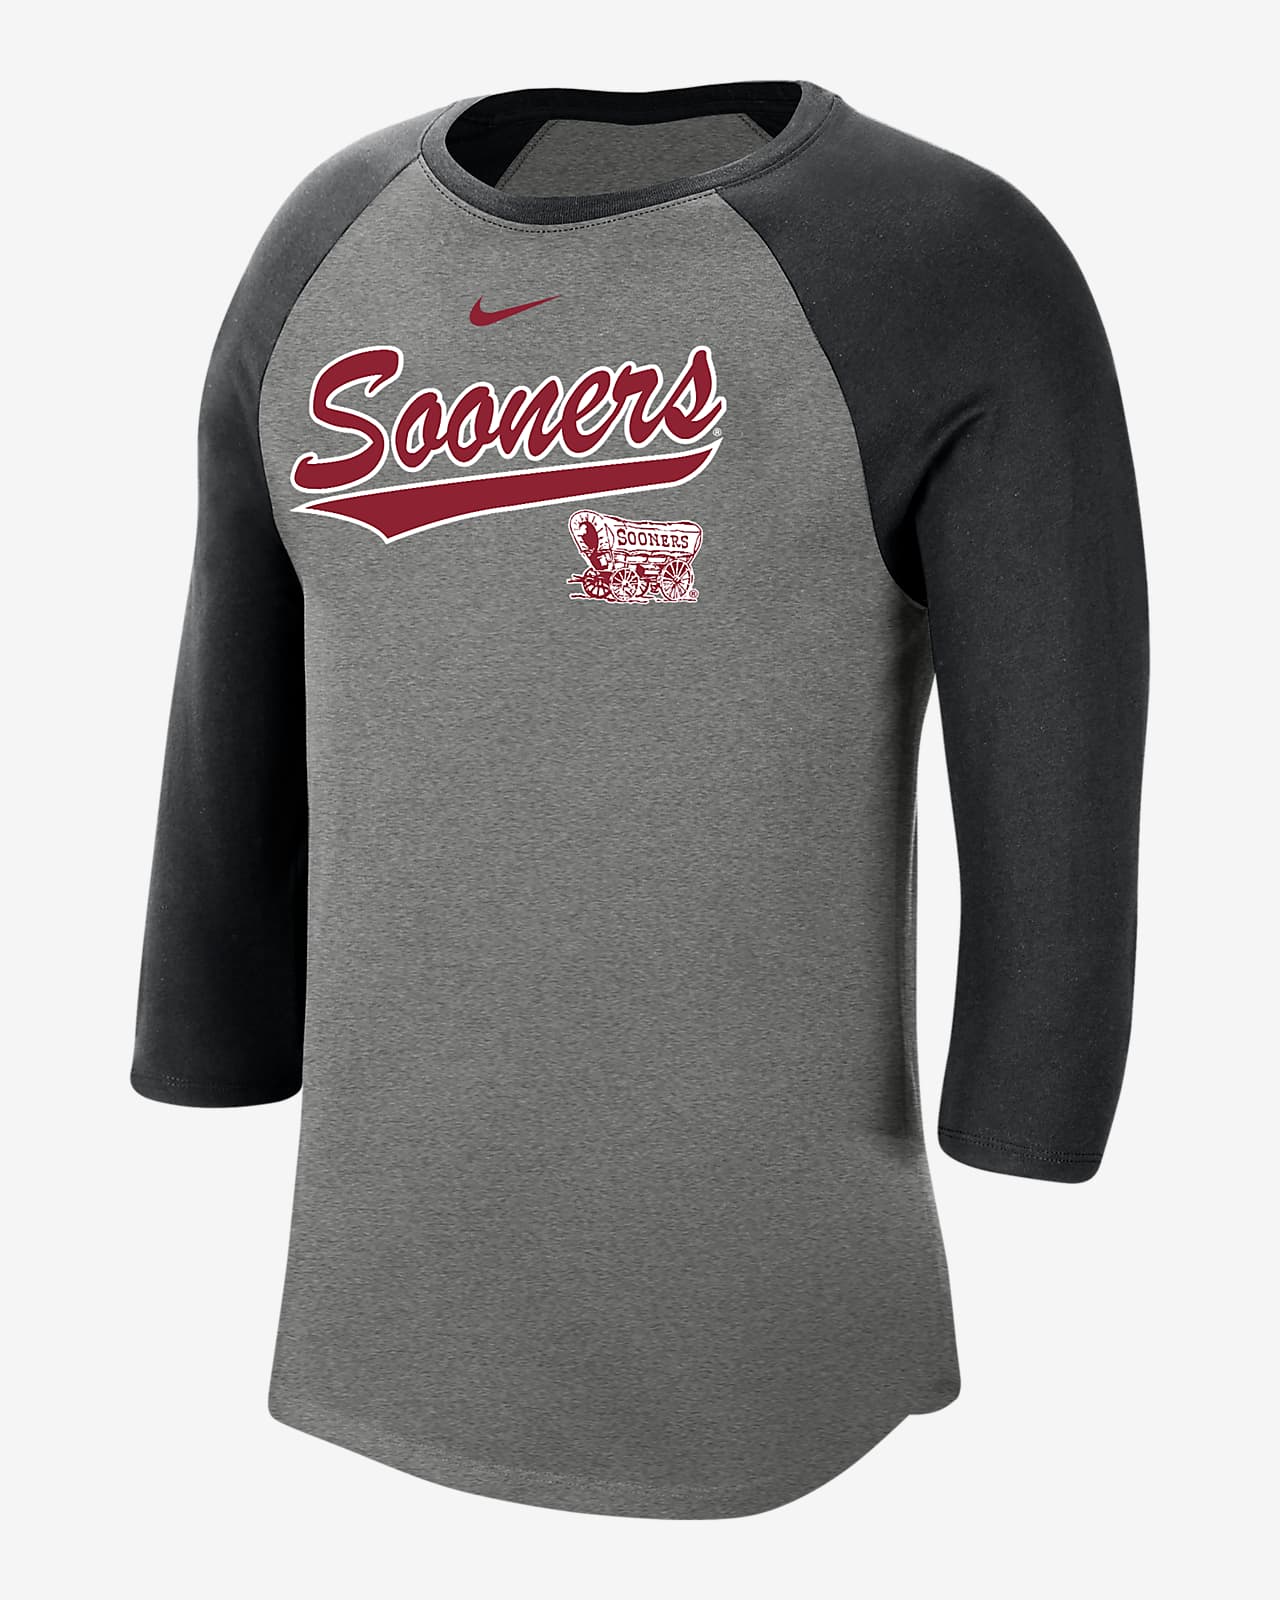 Nike College (Oklahoma) Men's T-Shirt